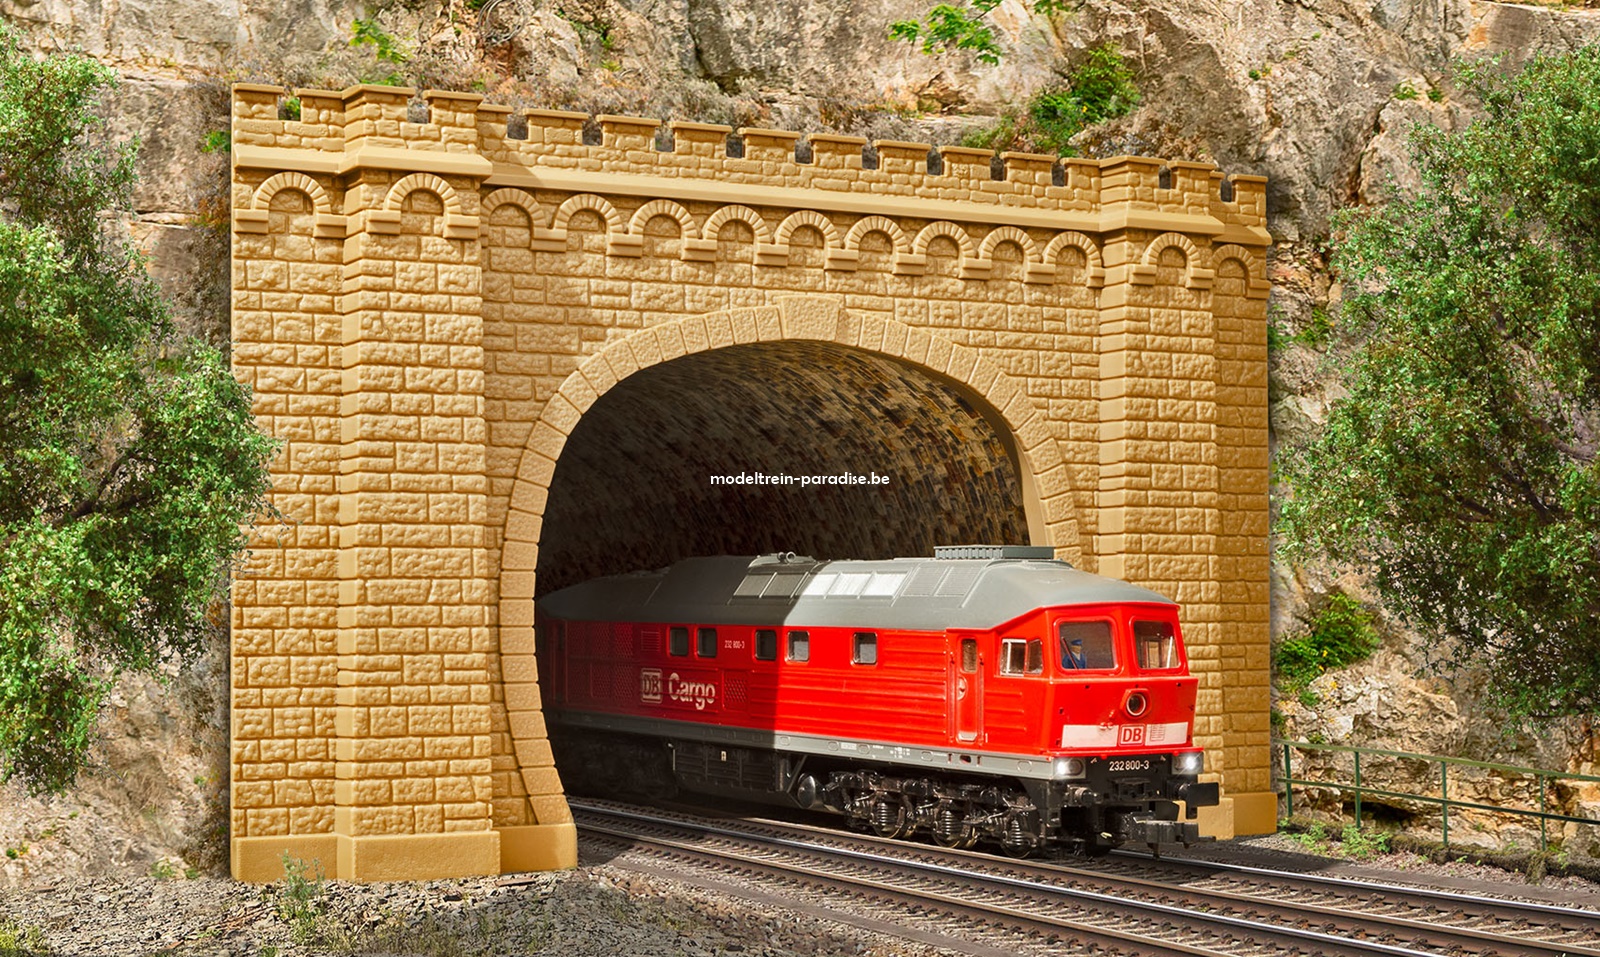 42506 ... Tunnelportal "Moseltal", 2-gleisig